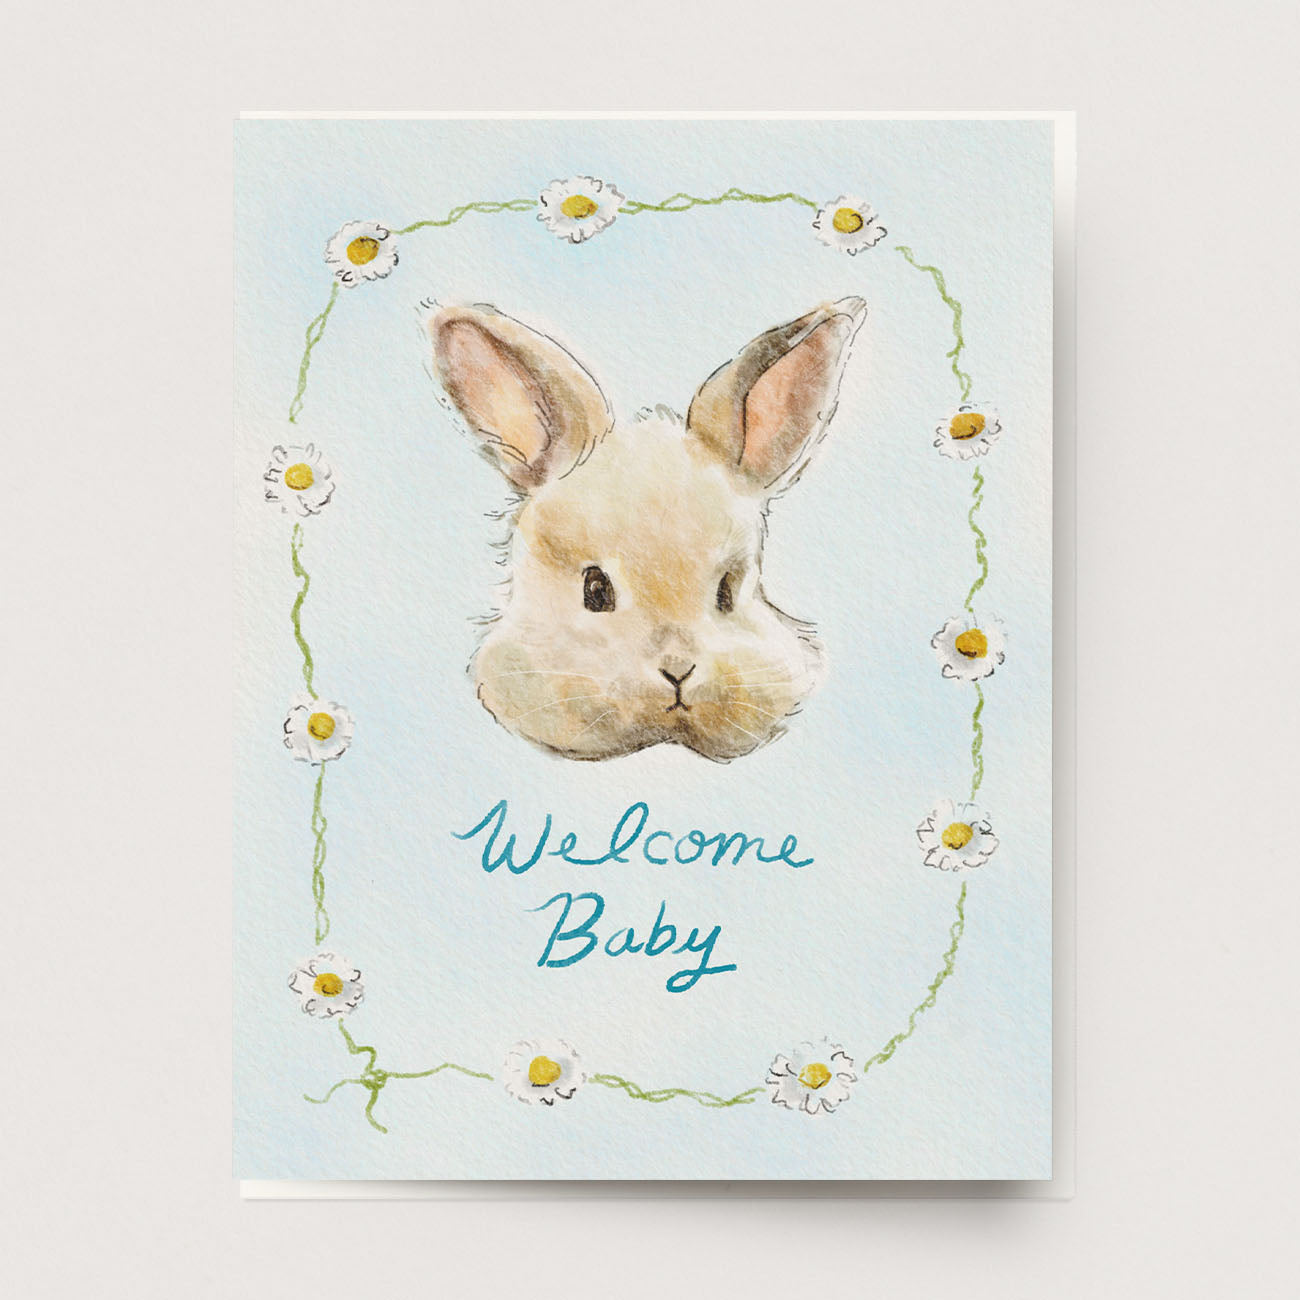 Welcome Baby Bunny Card B-107